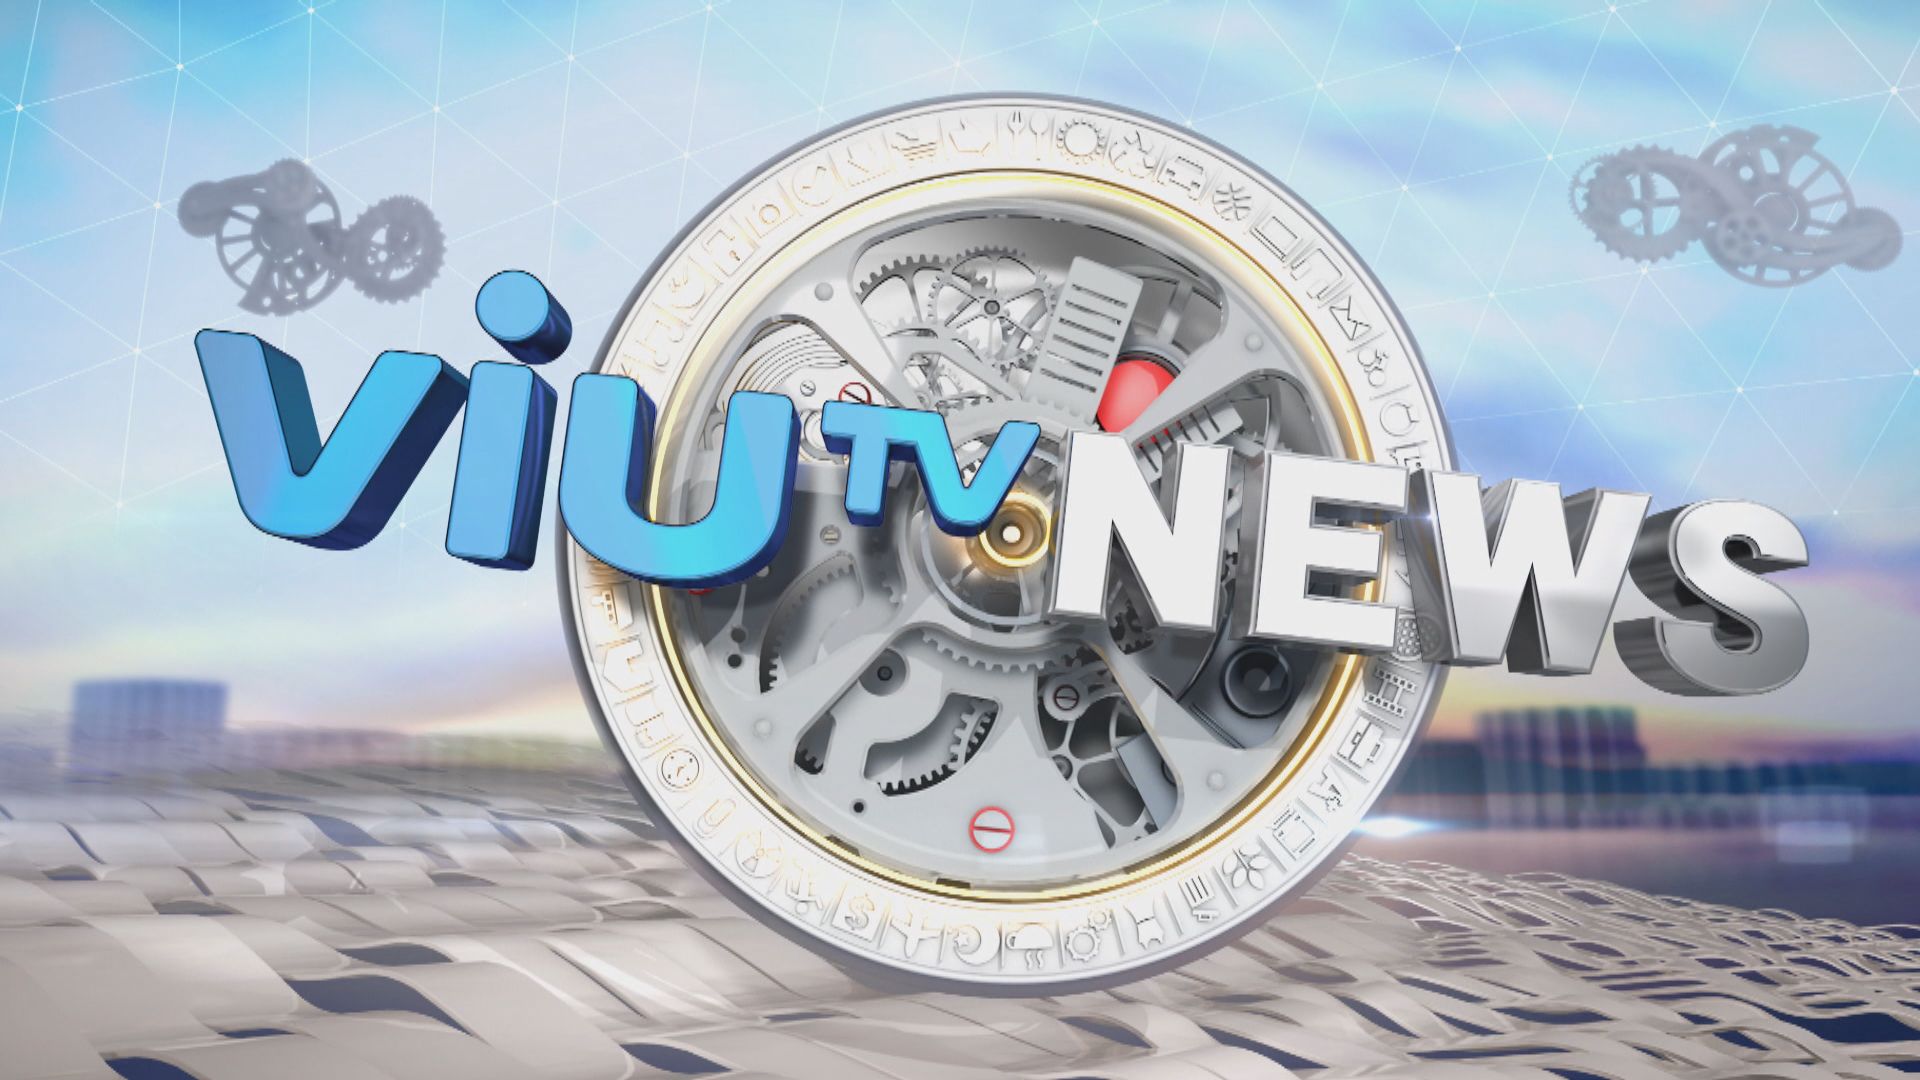 ViuTV News | News Bulletin at 11pm (8.3.2023)